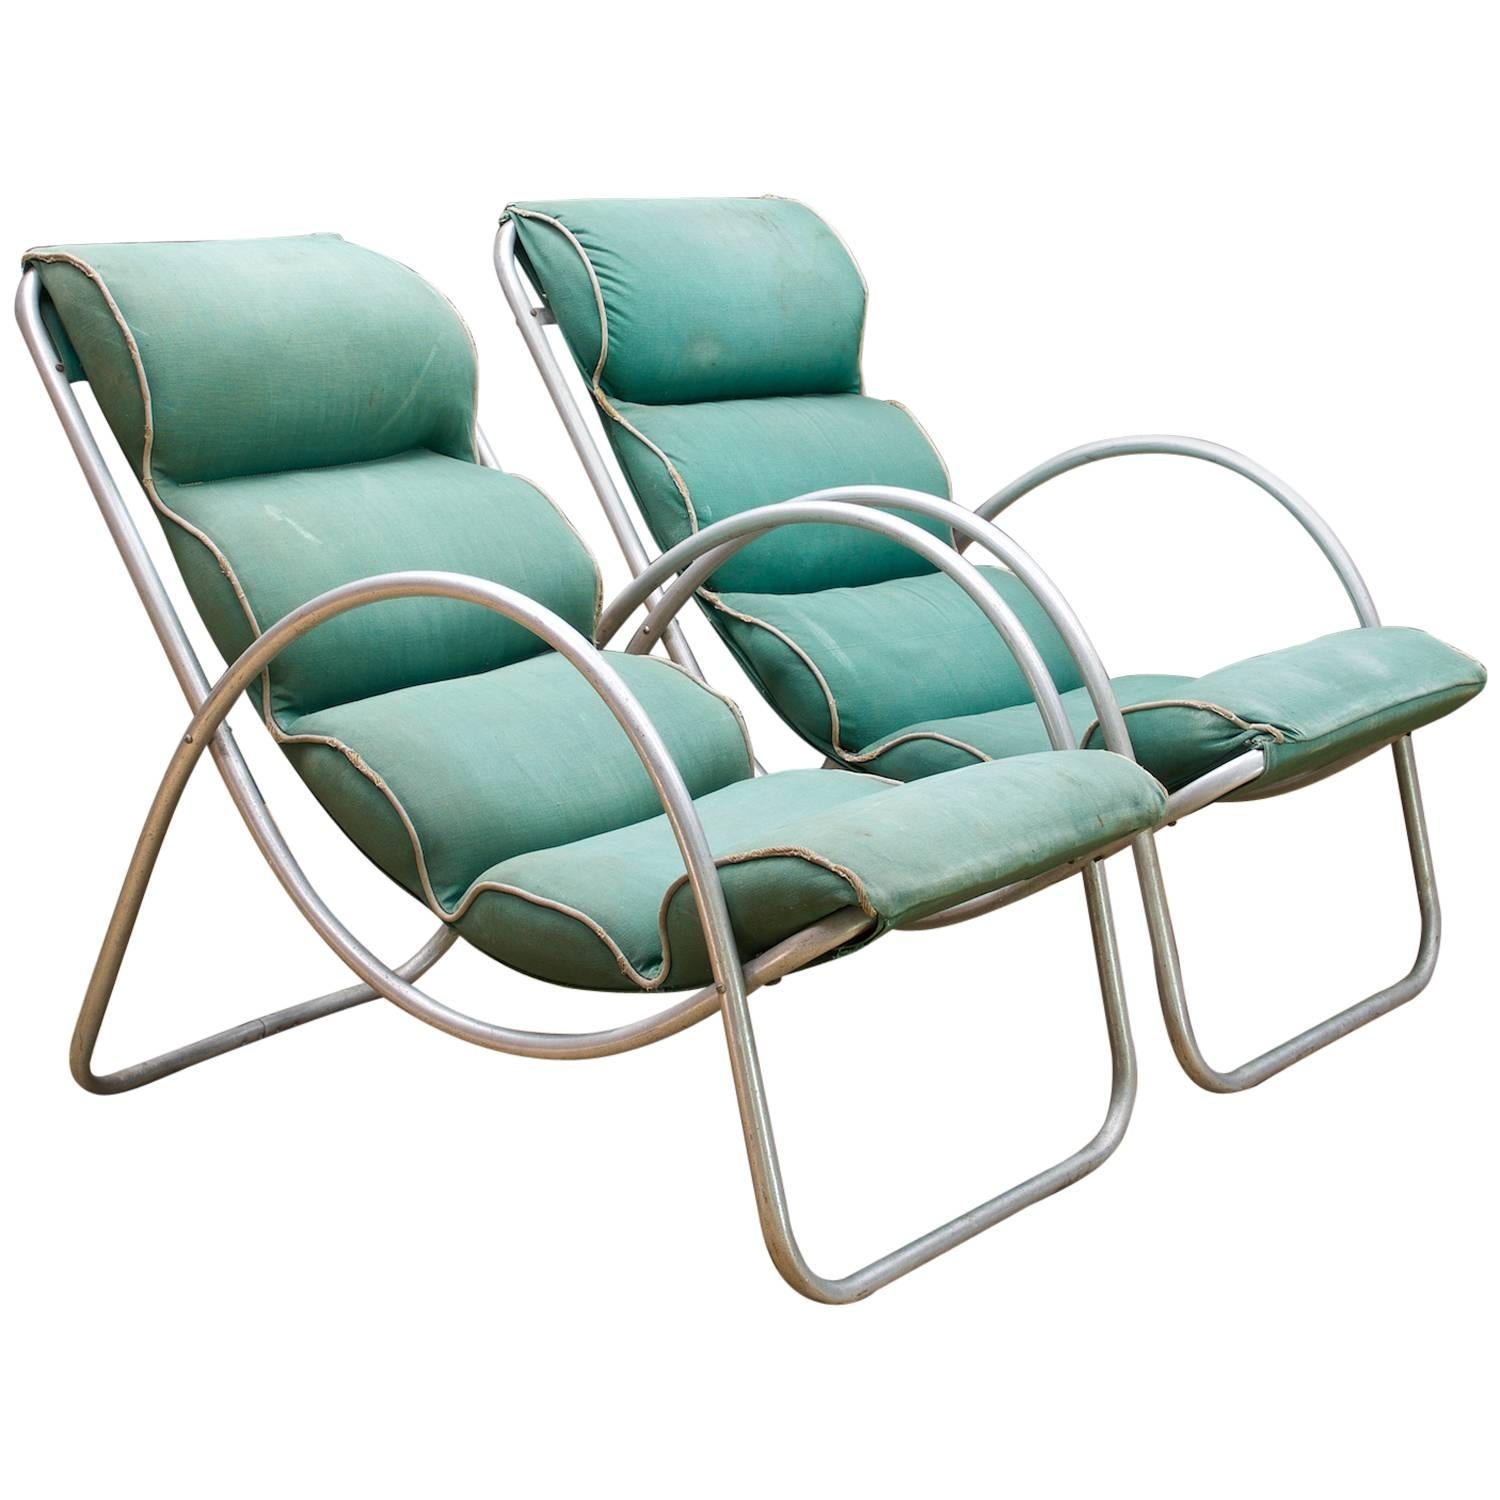 Machine Age Halliburton Neutra Lawn Lounge Chairs, Pair